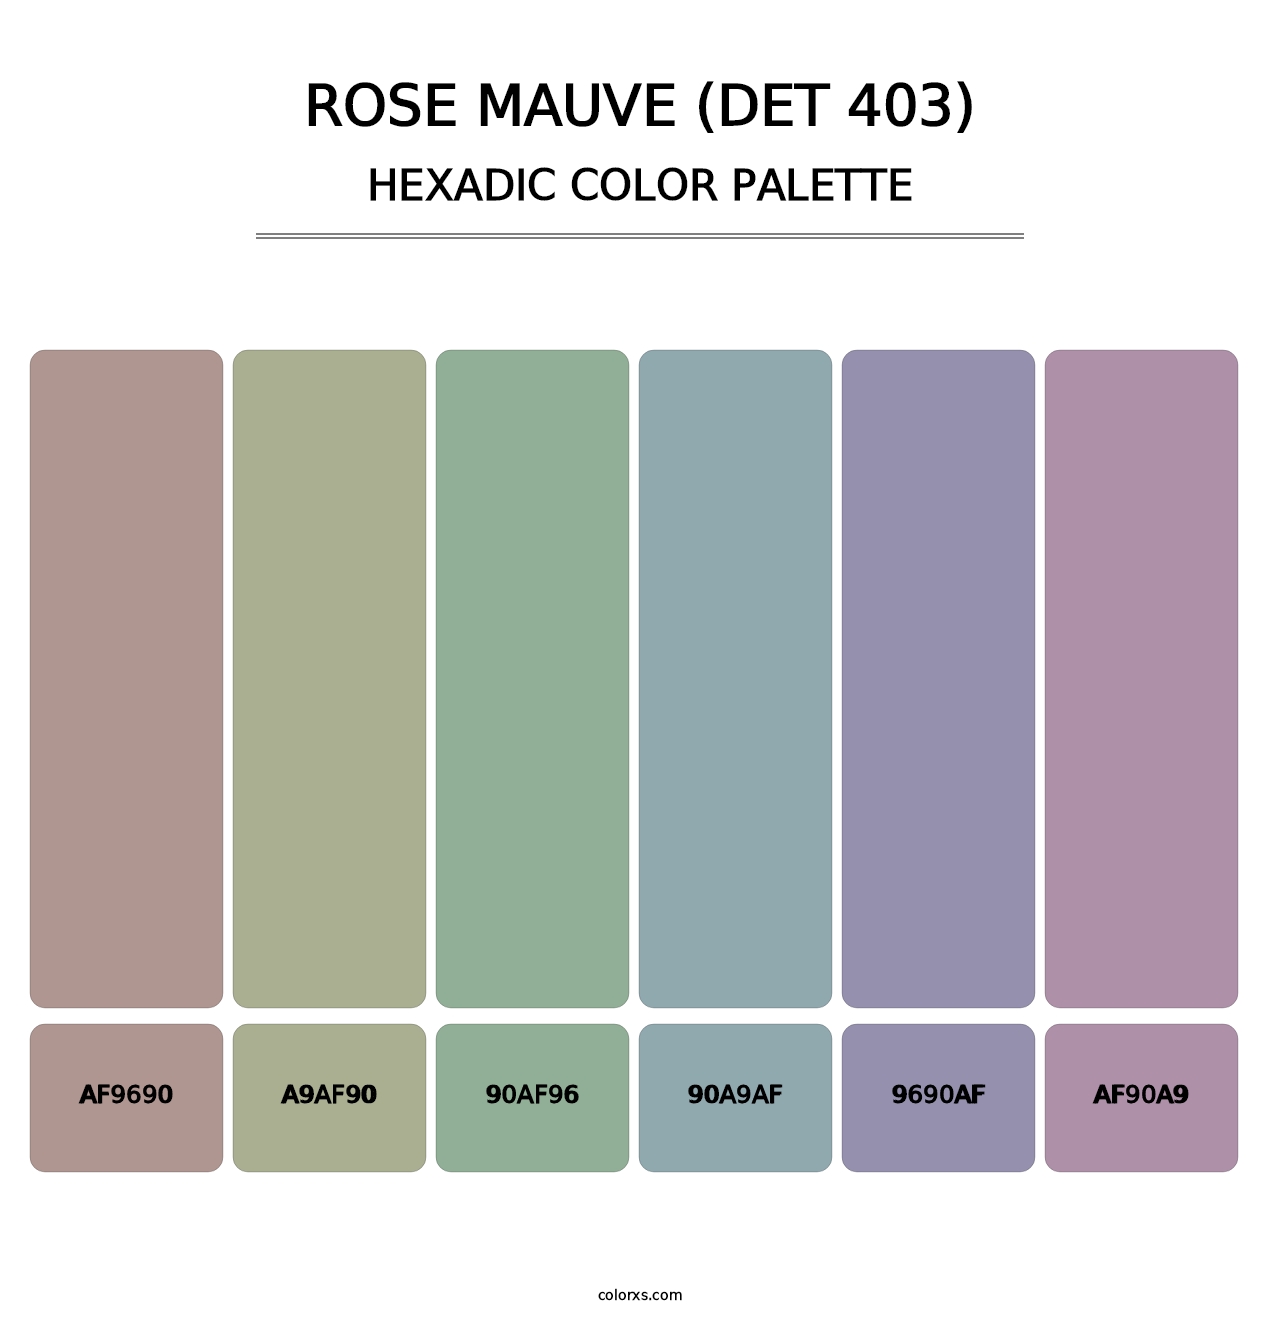 Rose Mauve (DET 403) - Hexadic Color Palette